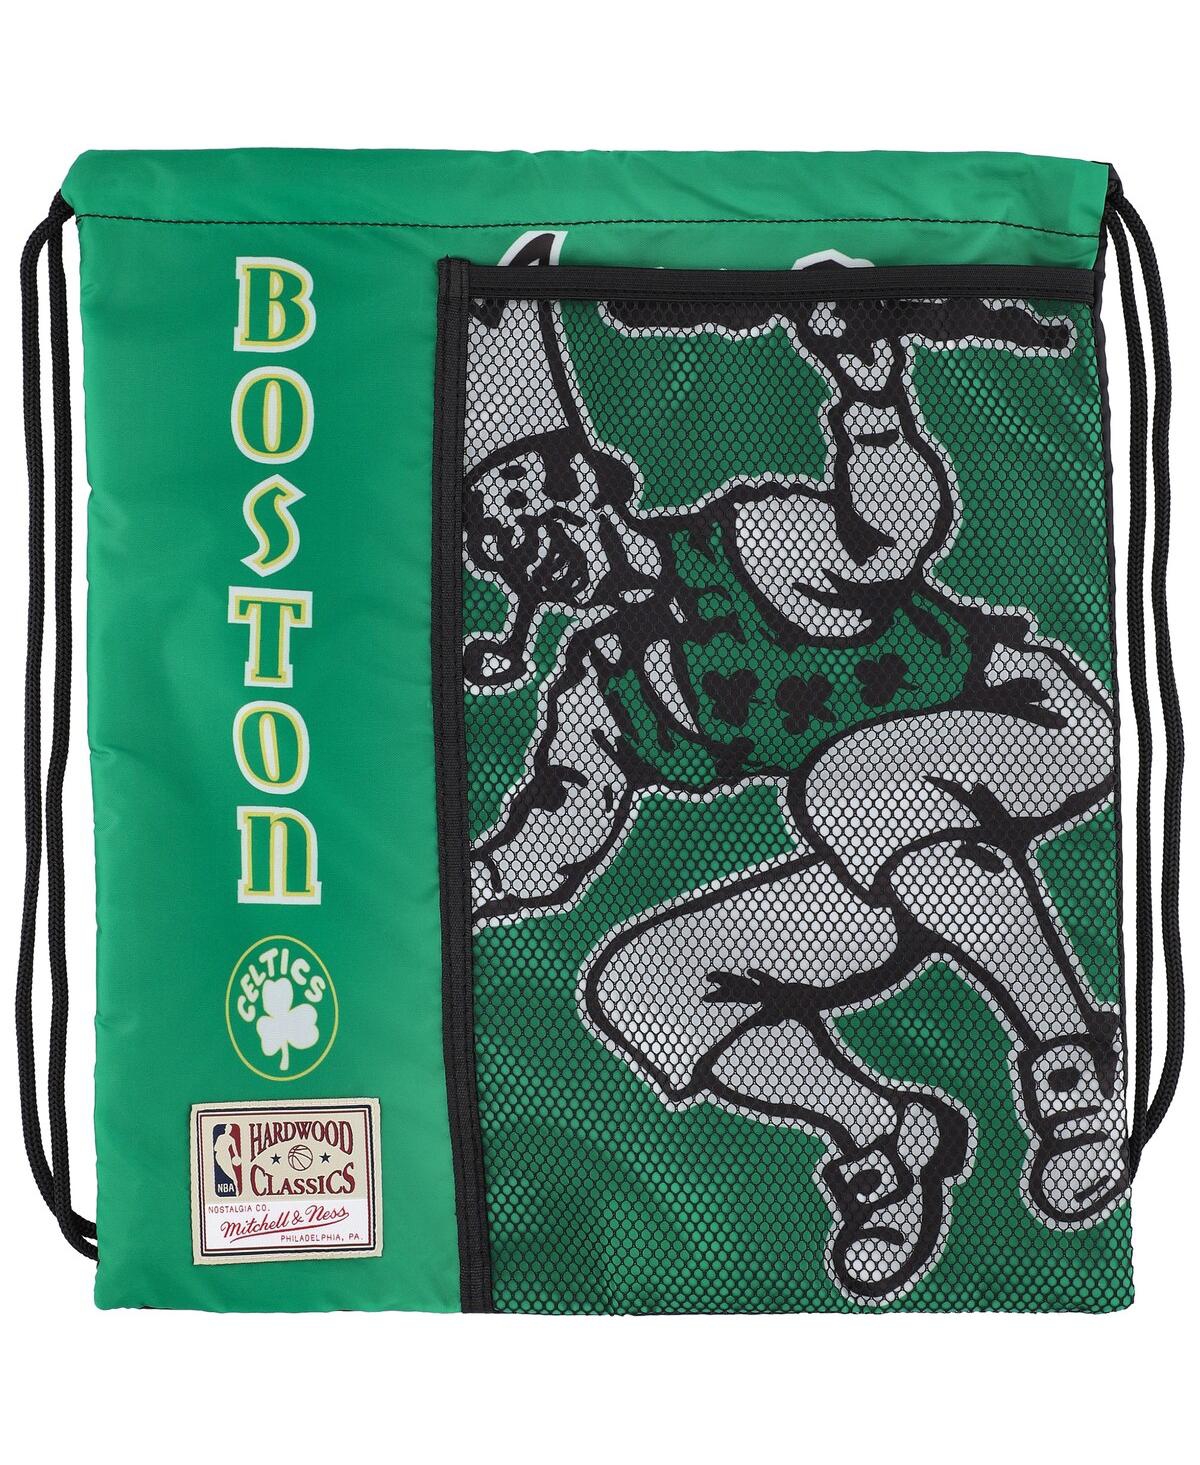 Men's and Women's Mitchell & Ness Boston Celtics Hardwood ClassicsÂ Team Logo Cinch Bag - Multi